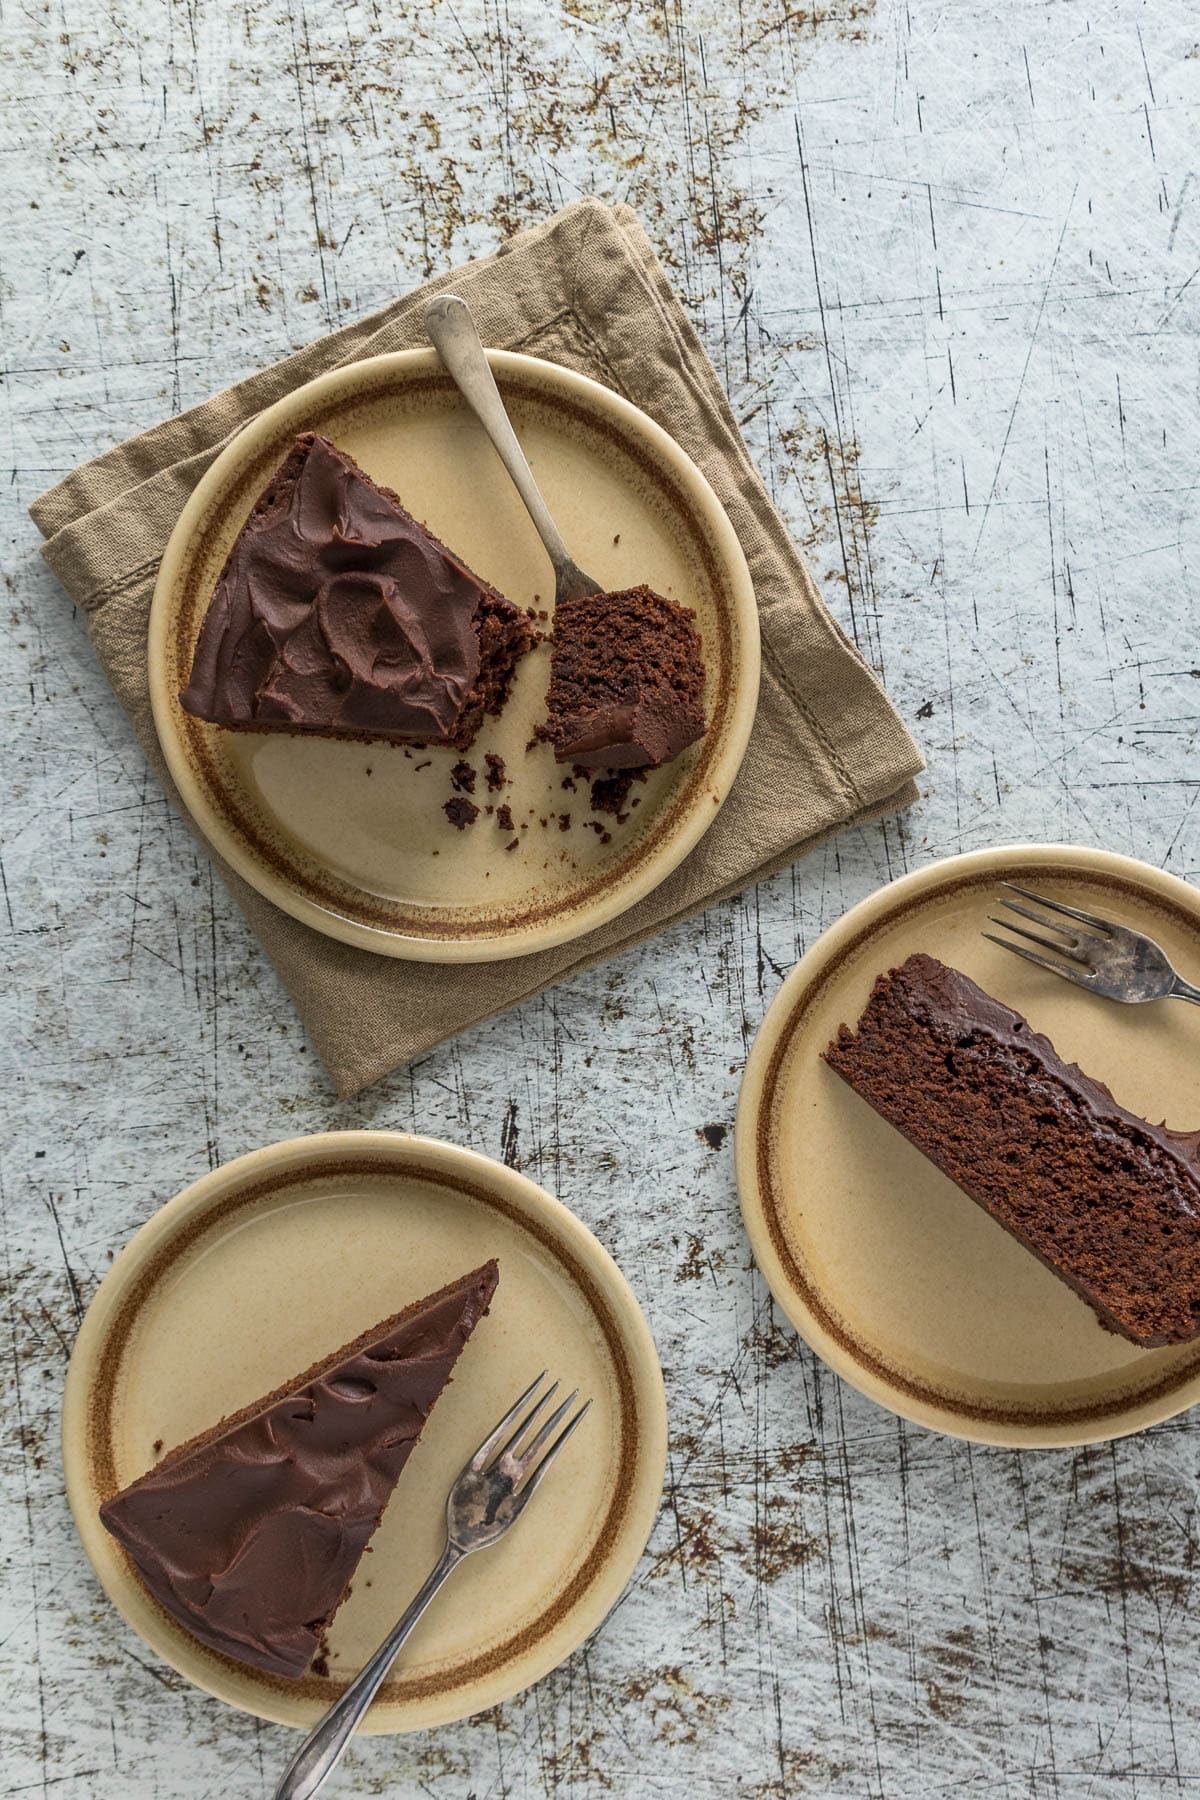 Slices of chocolate fudge cake on plates.